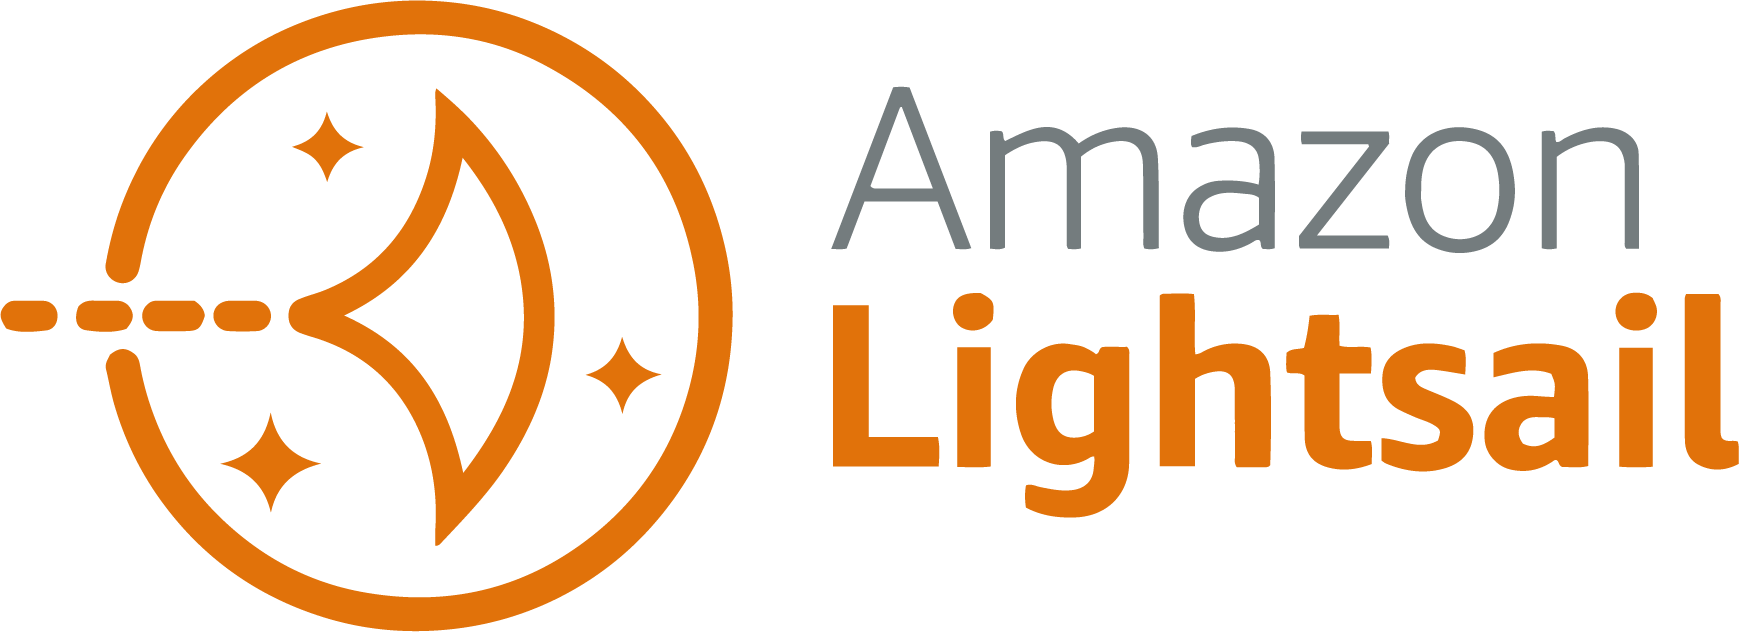 Amazon Lightsail logo